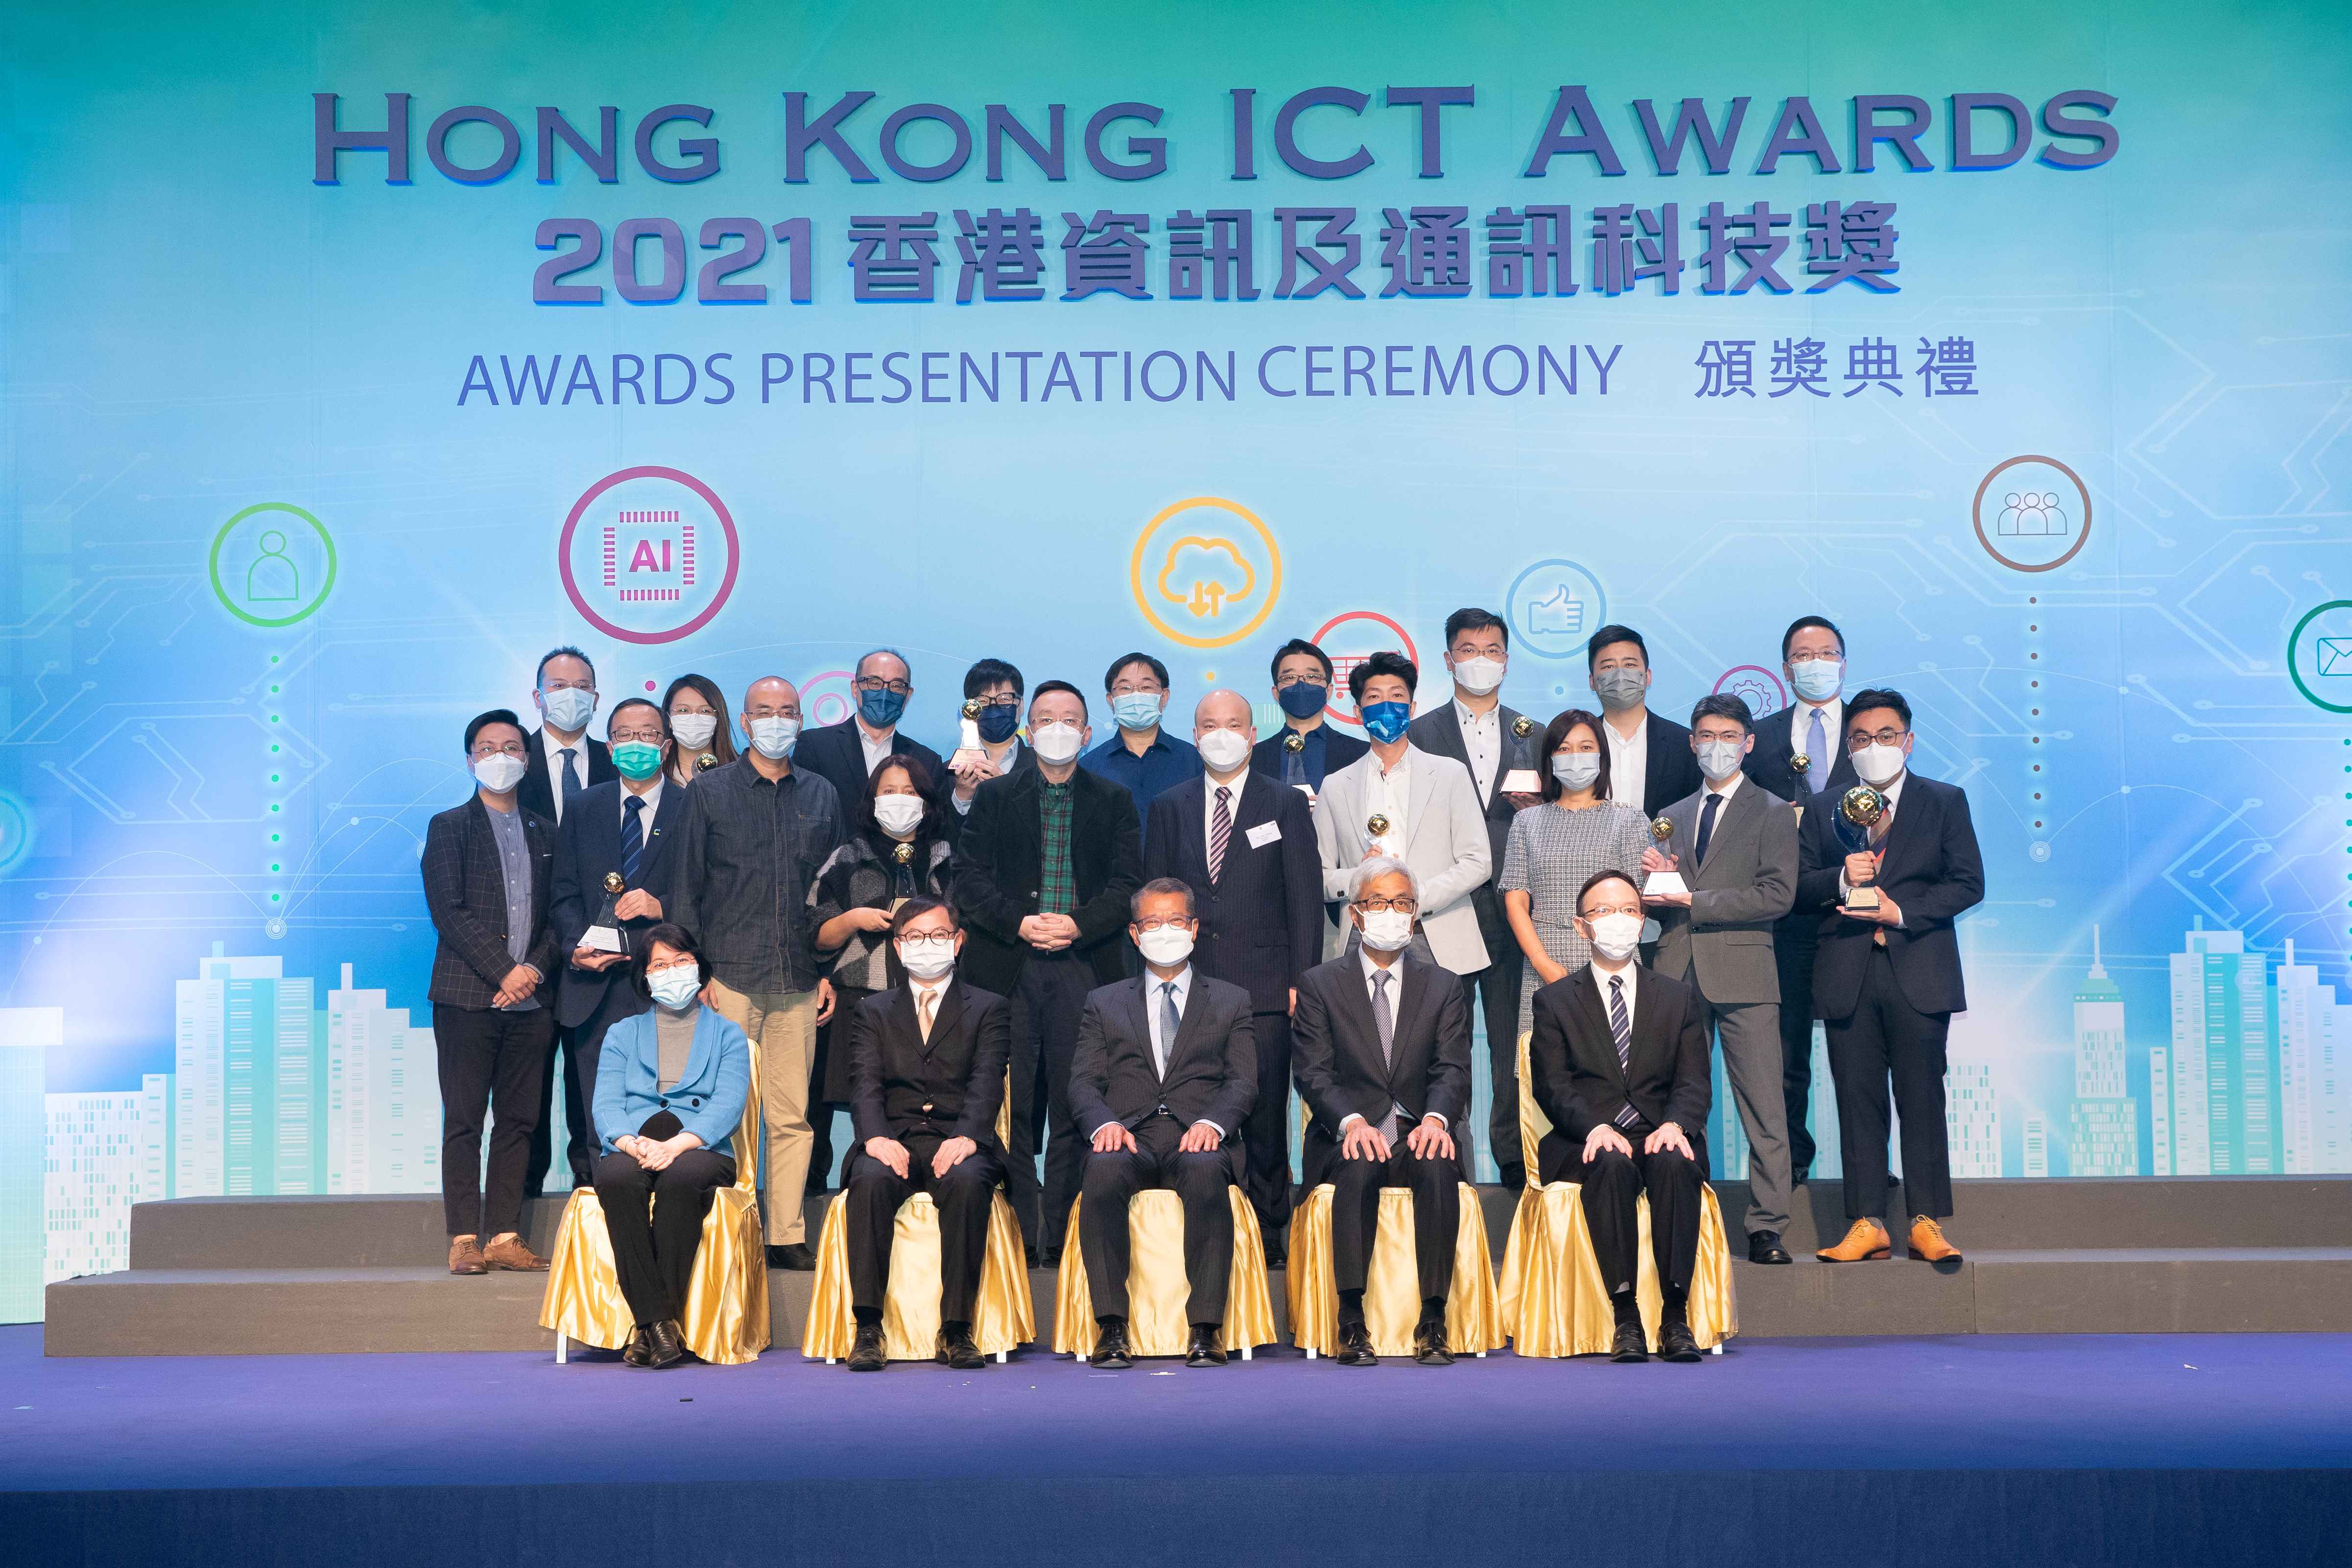 Hong Kong ICT Awards 2021 Smart Living Award Winners Group Photo